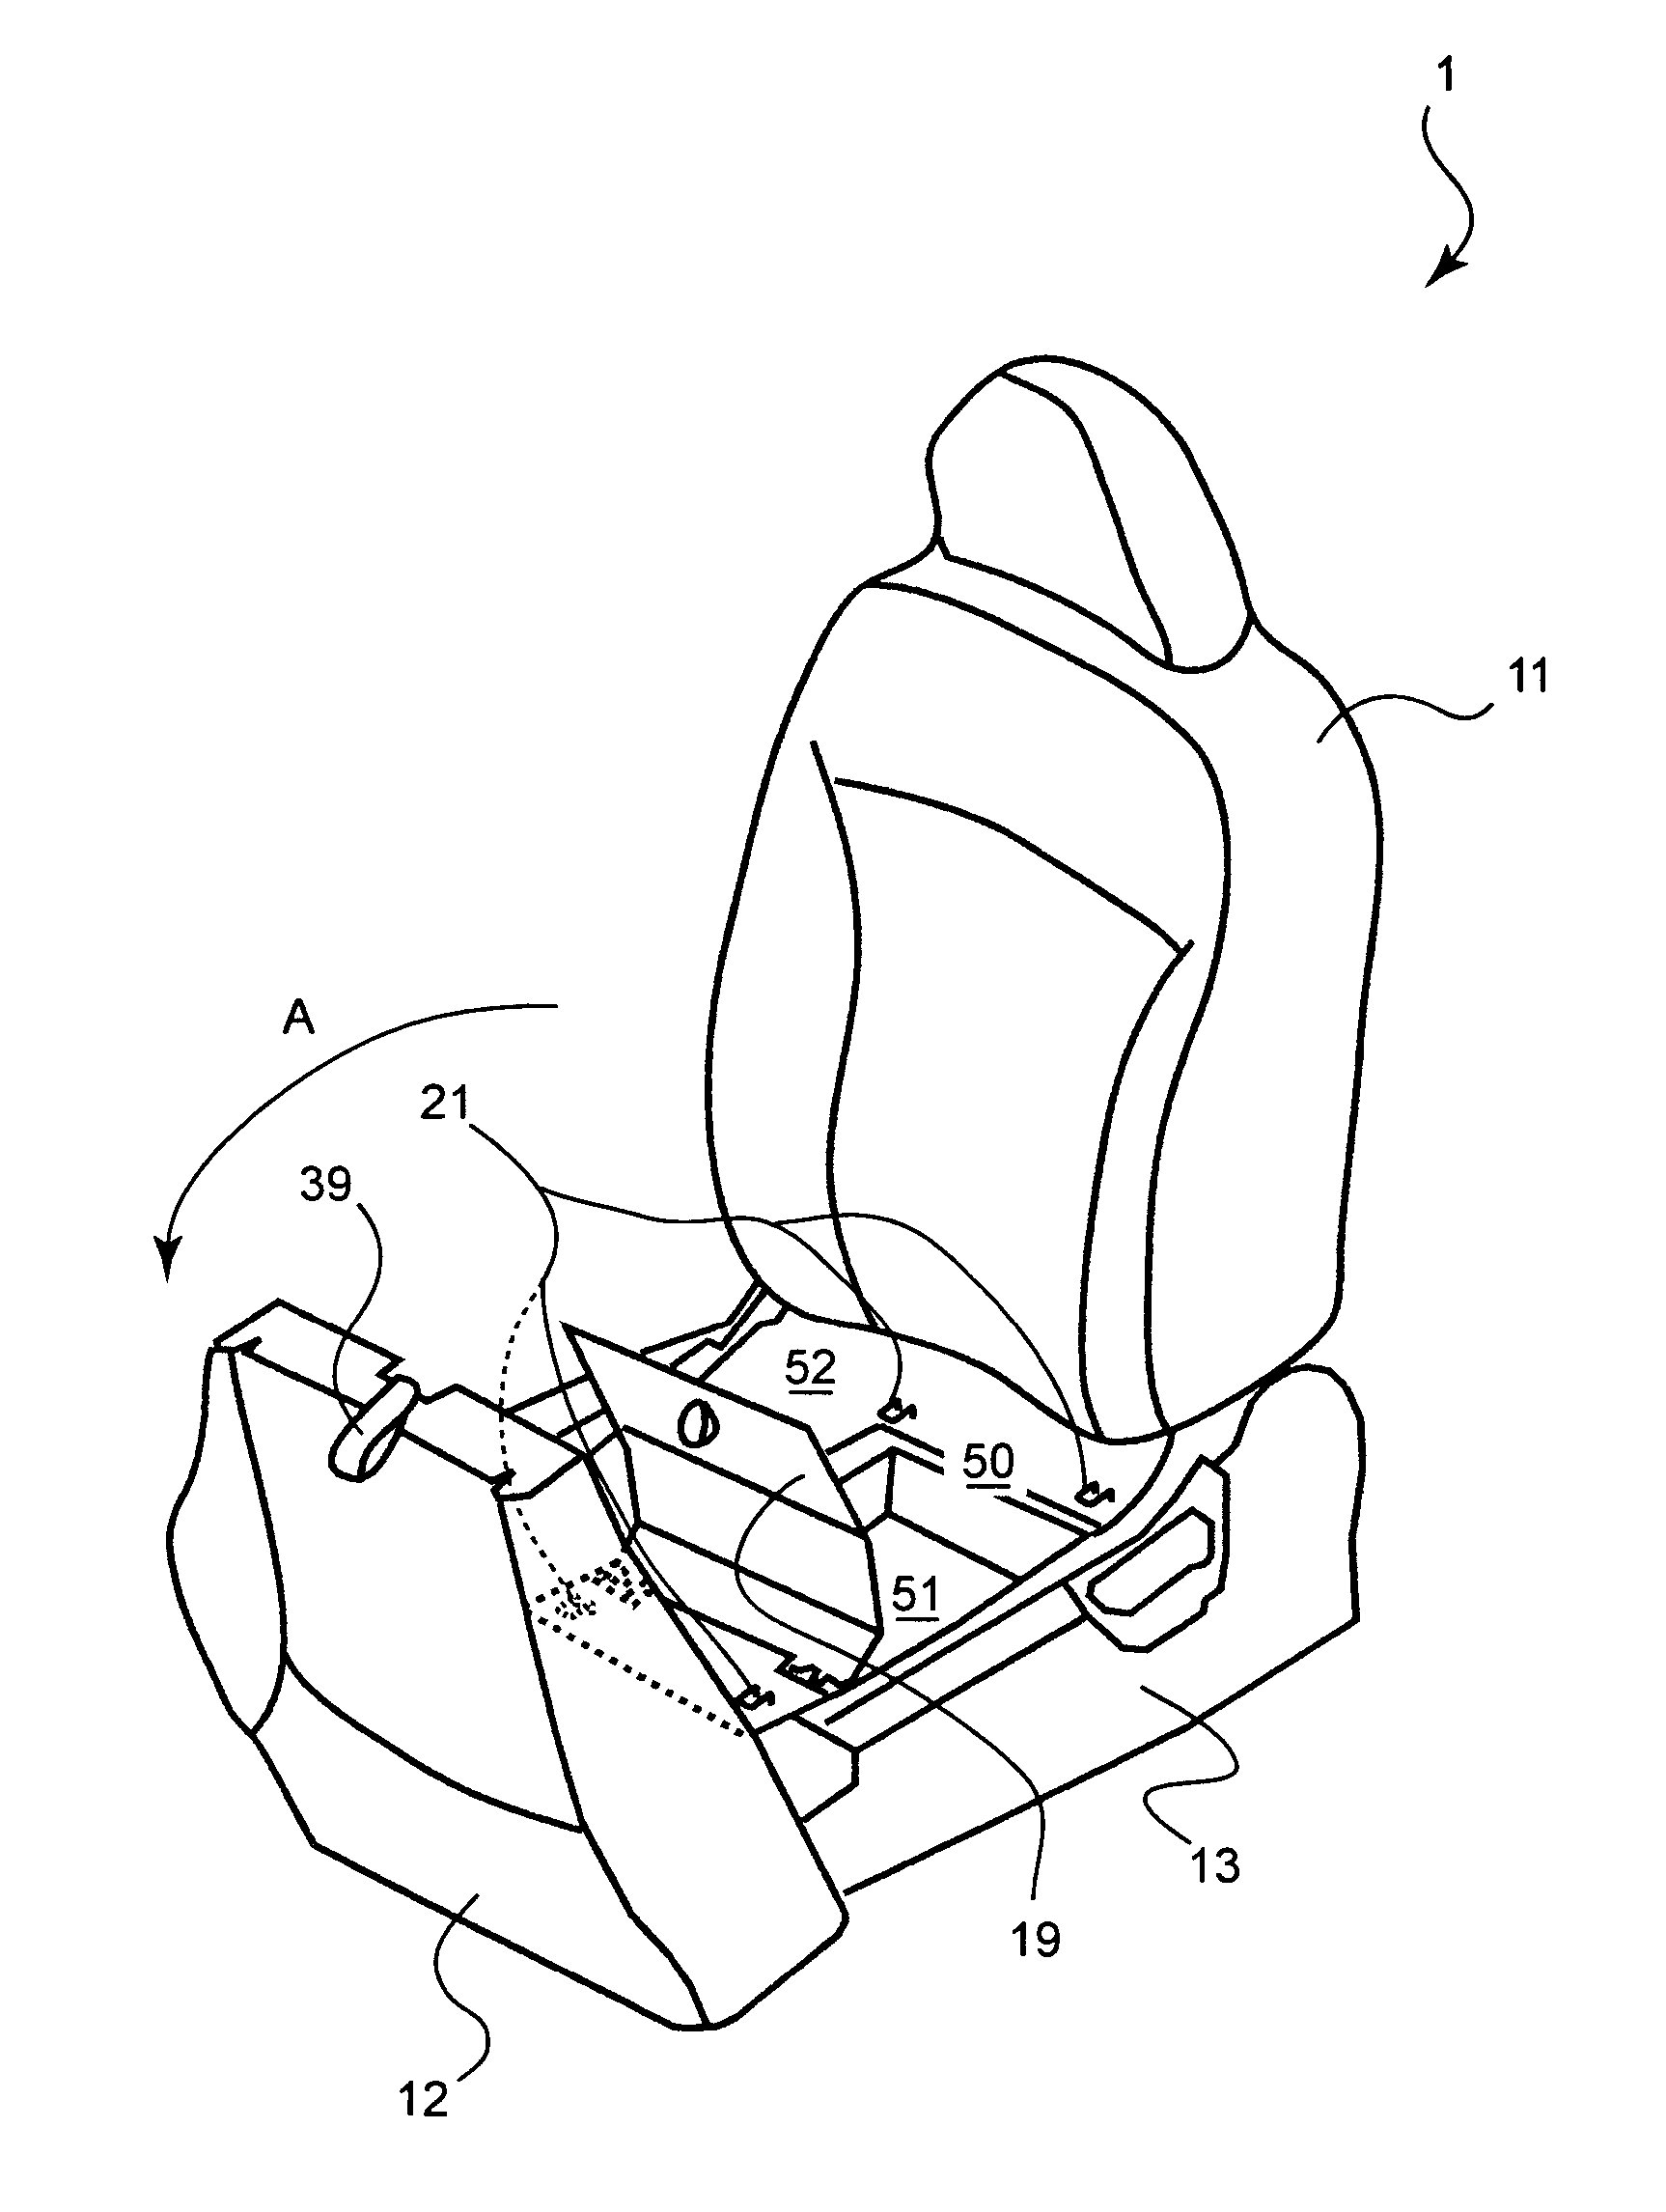 Vehicular under-seat compartment mechanism